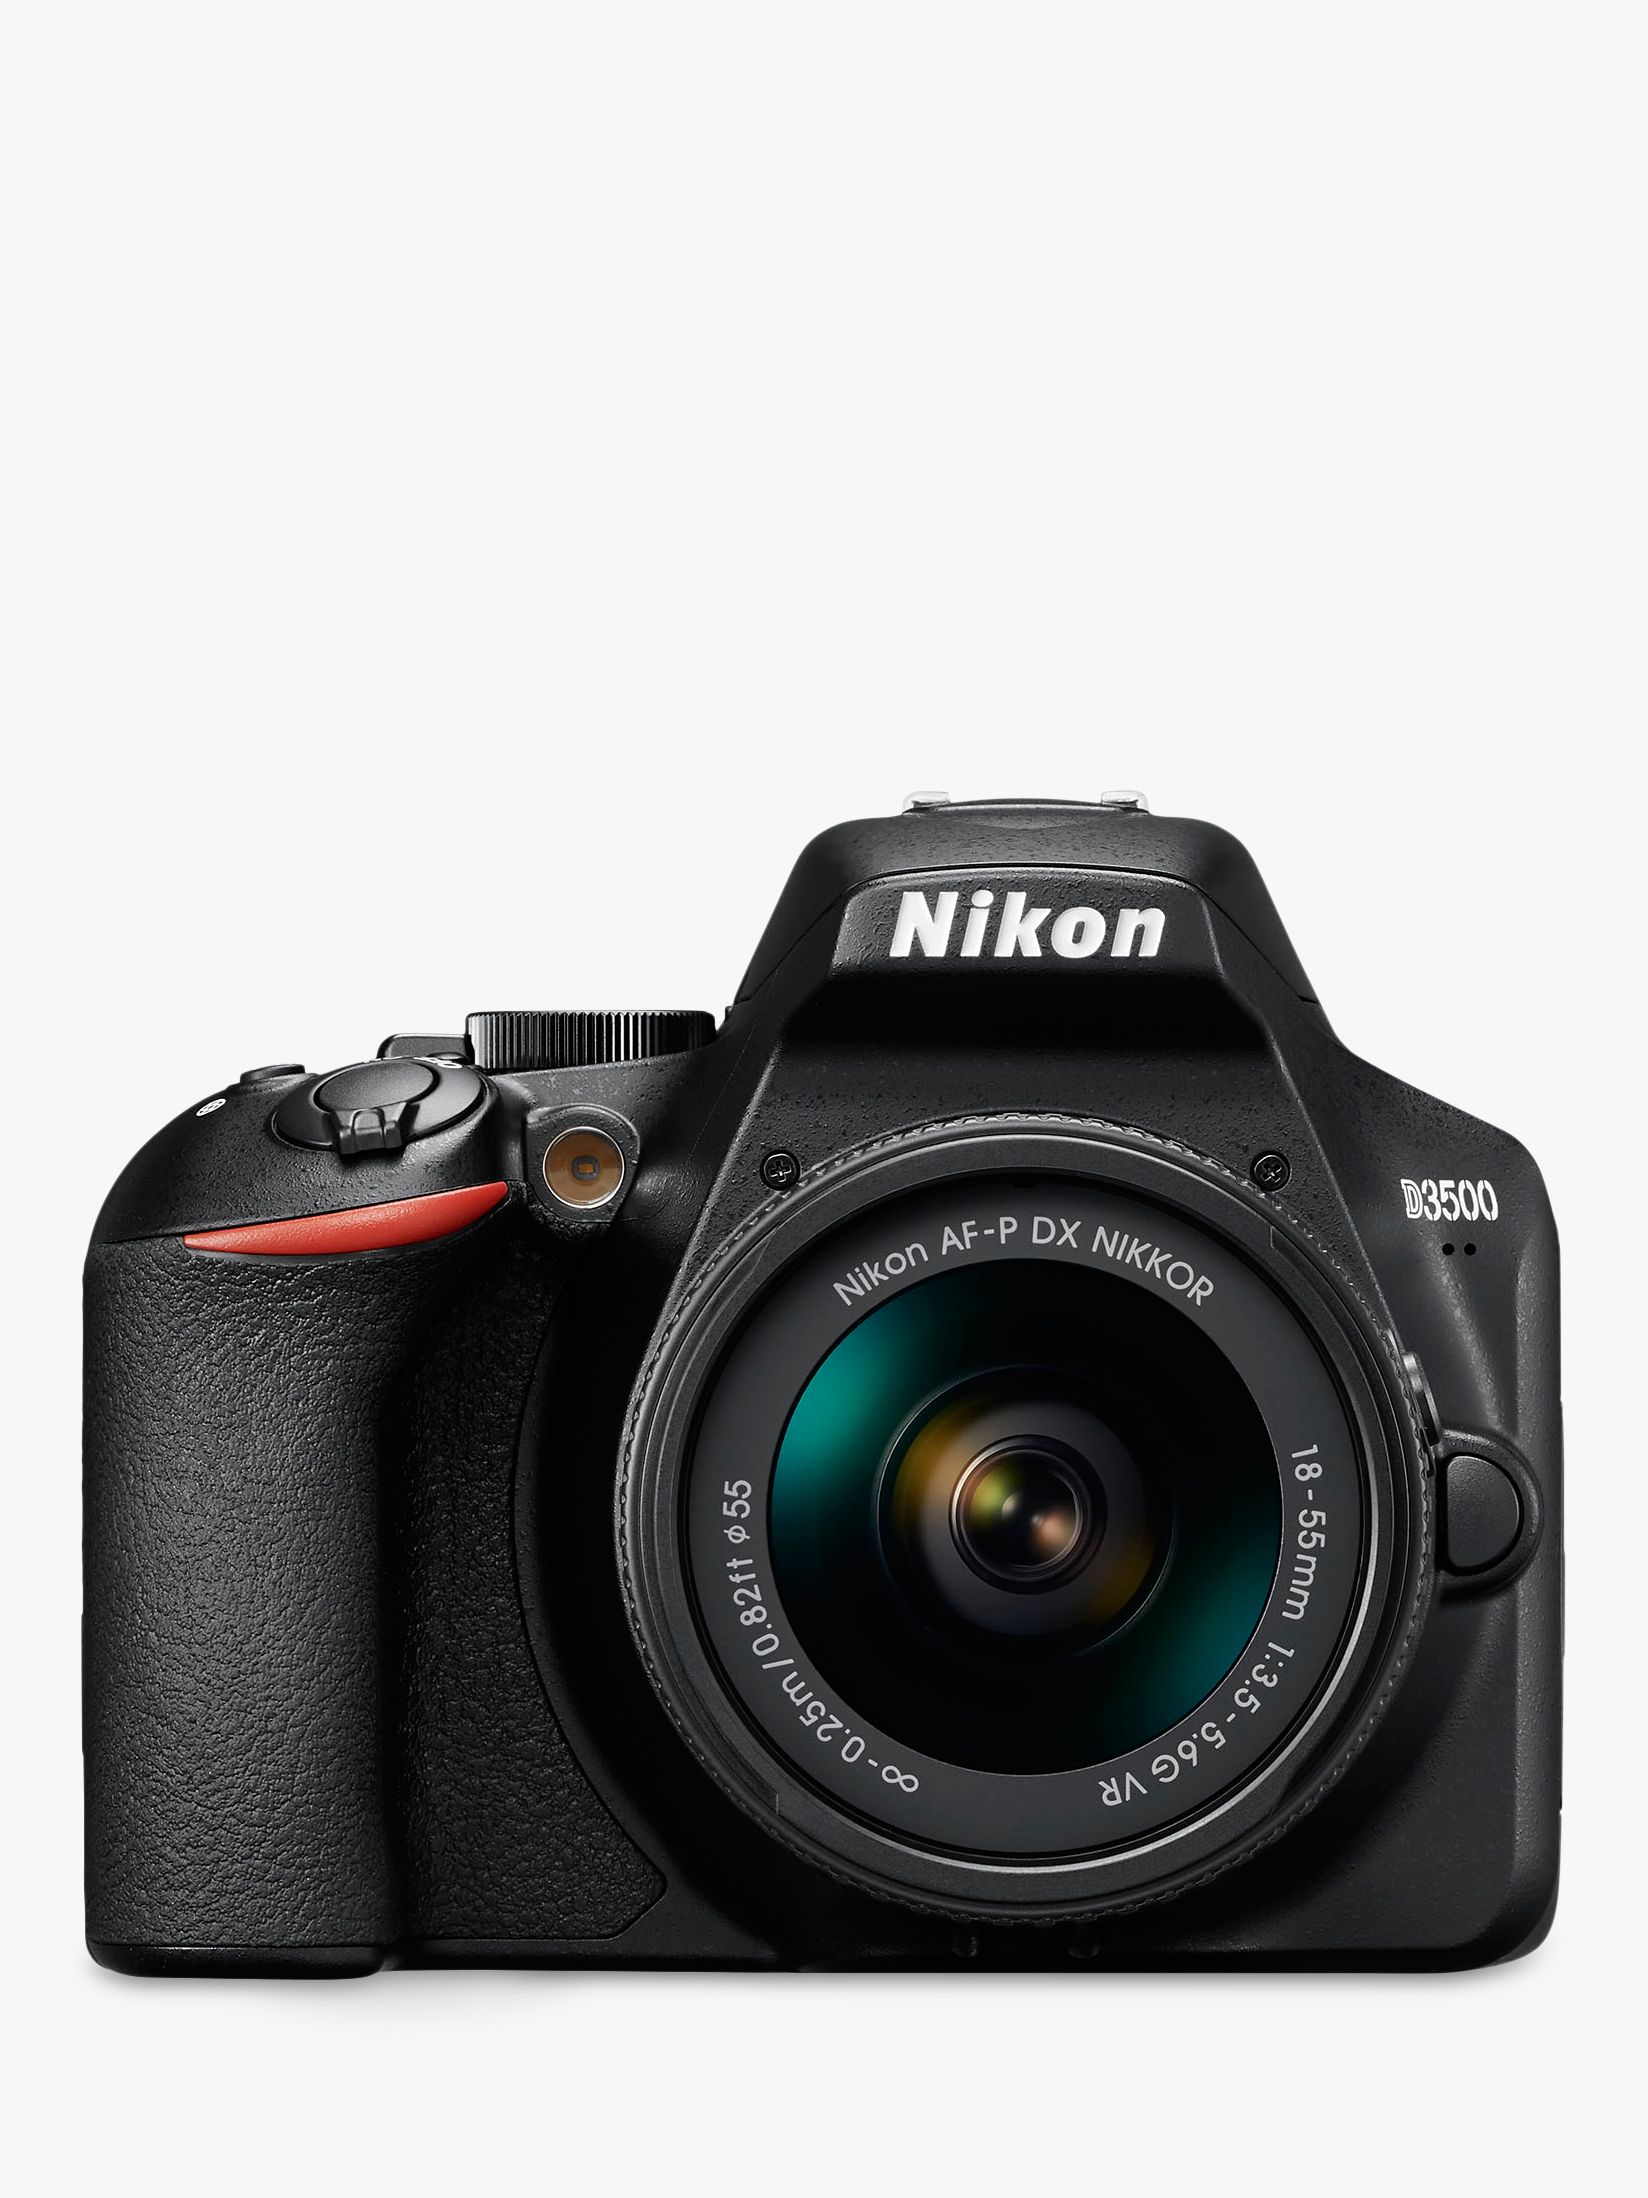 Nikon D3500 Digital SLR Camera with 18-55mm VR Lens, HD 1080p, 24.2MP, Bluetooth, 3 LCD Screen